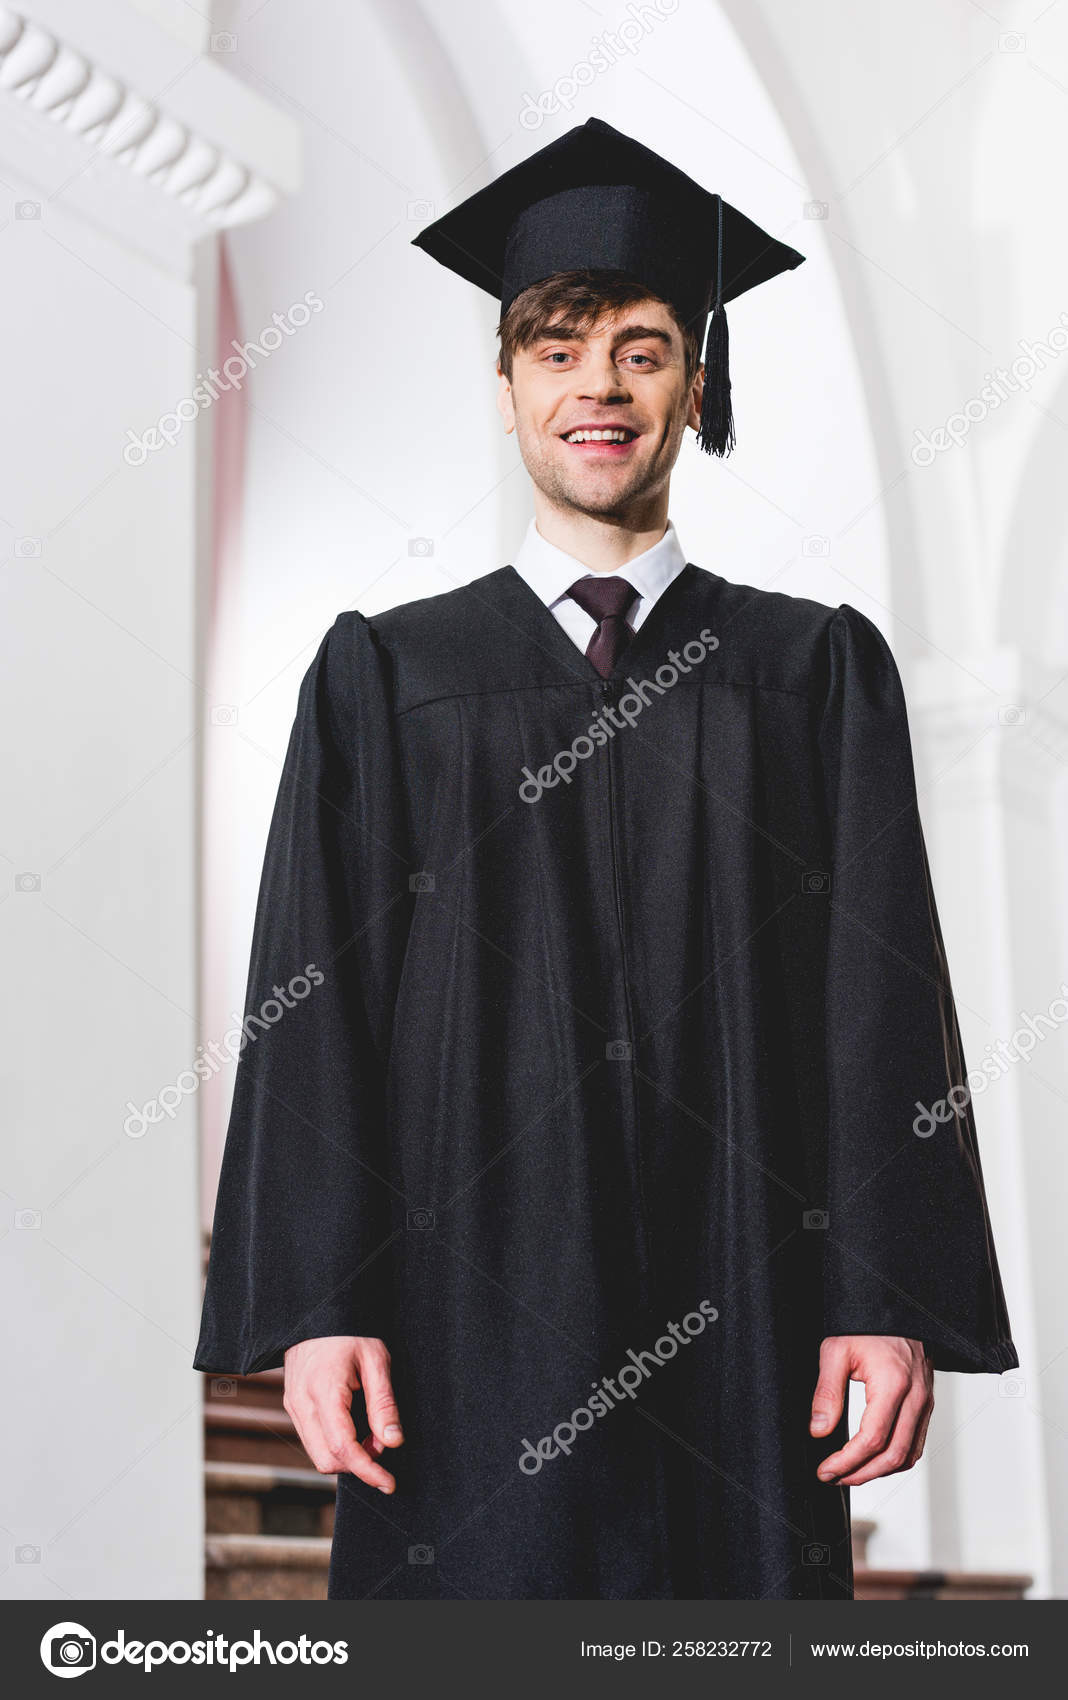 Happy Young Man Graduation Cap Smiling Looking Camera University